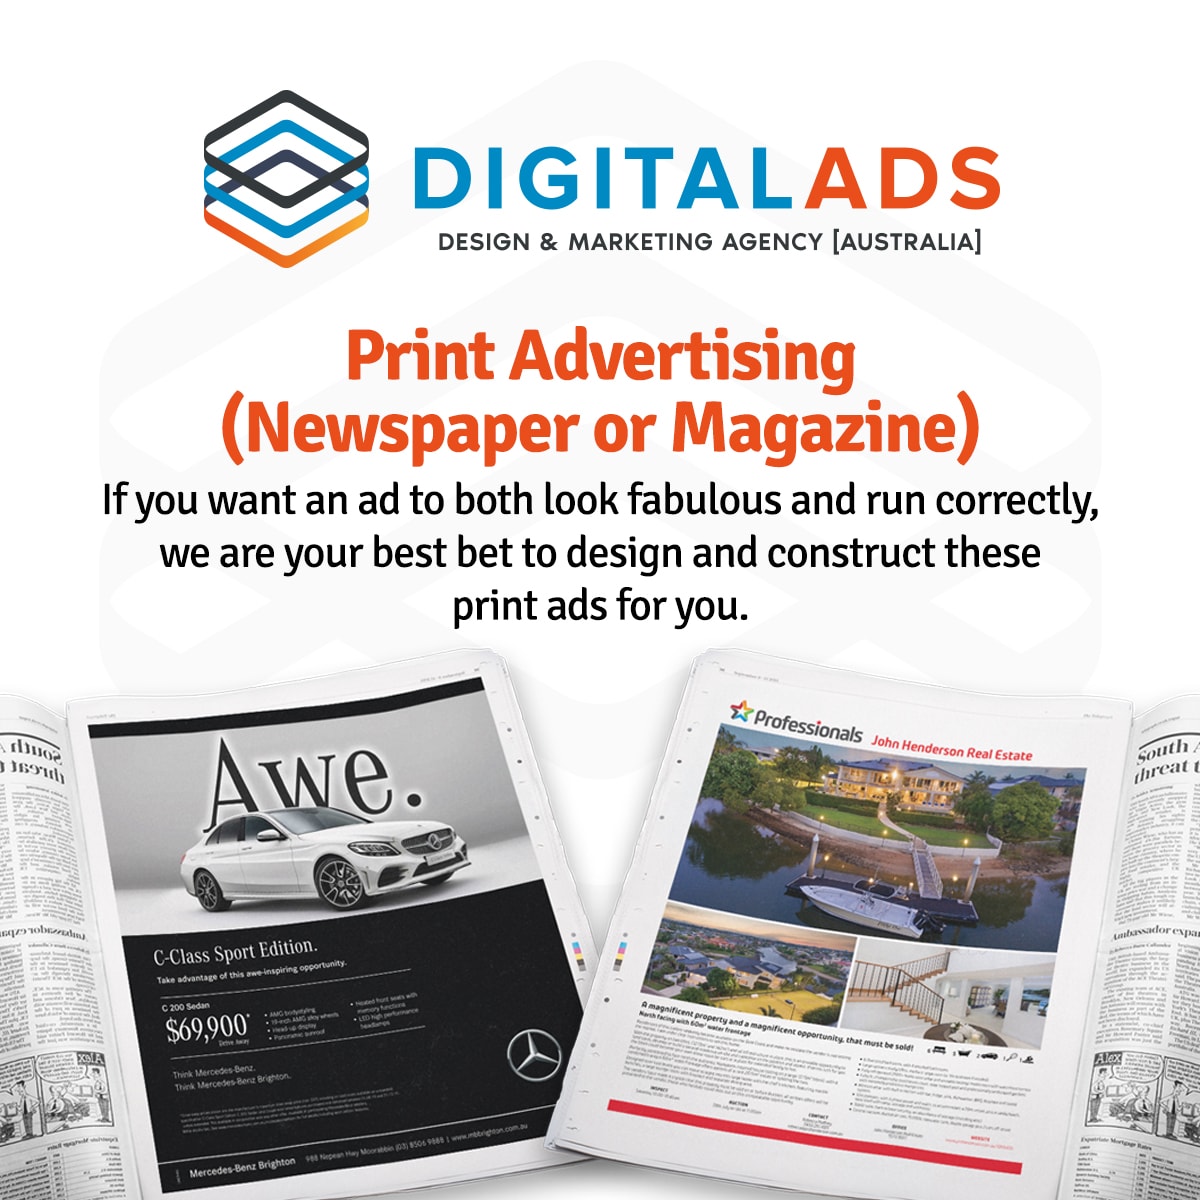 DigitalAds Preview Print Advertising Newspaper or Magazine Design Studio Marketing Agency Australia | Design, Advertising & Marketing Agency | DigitalAds [Australia]